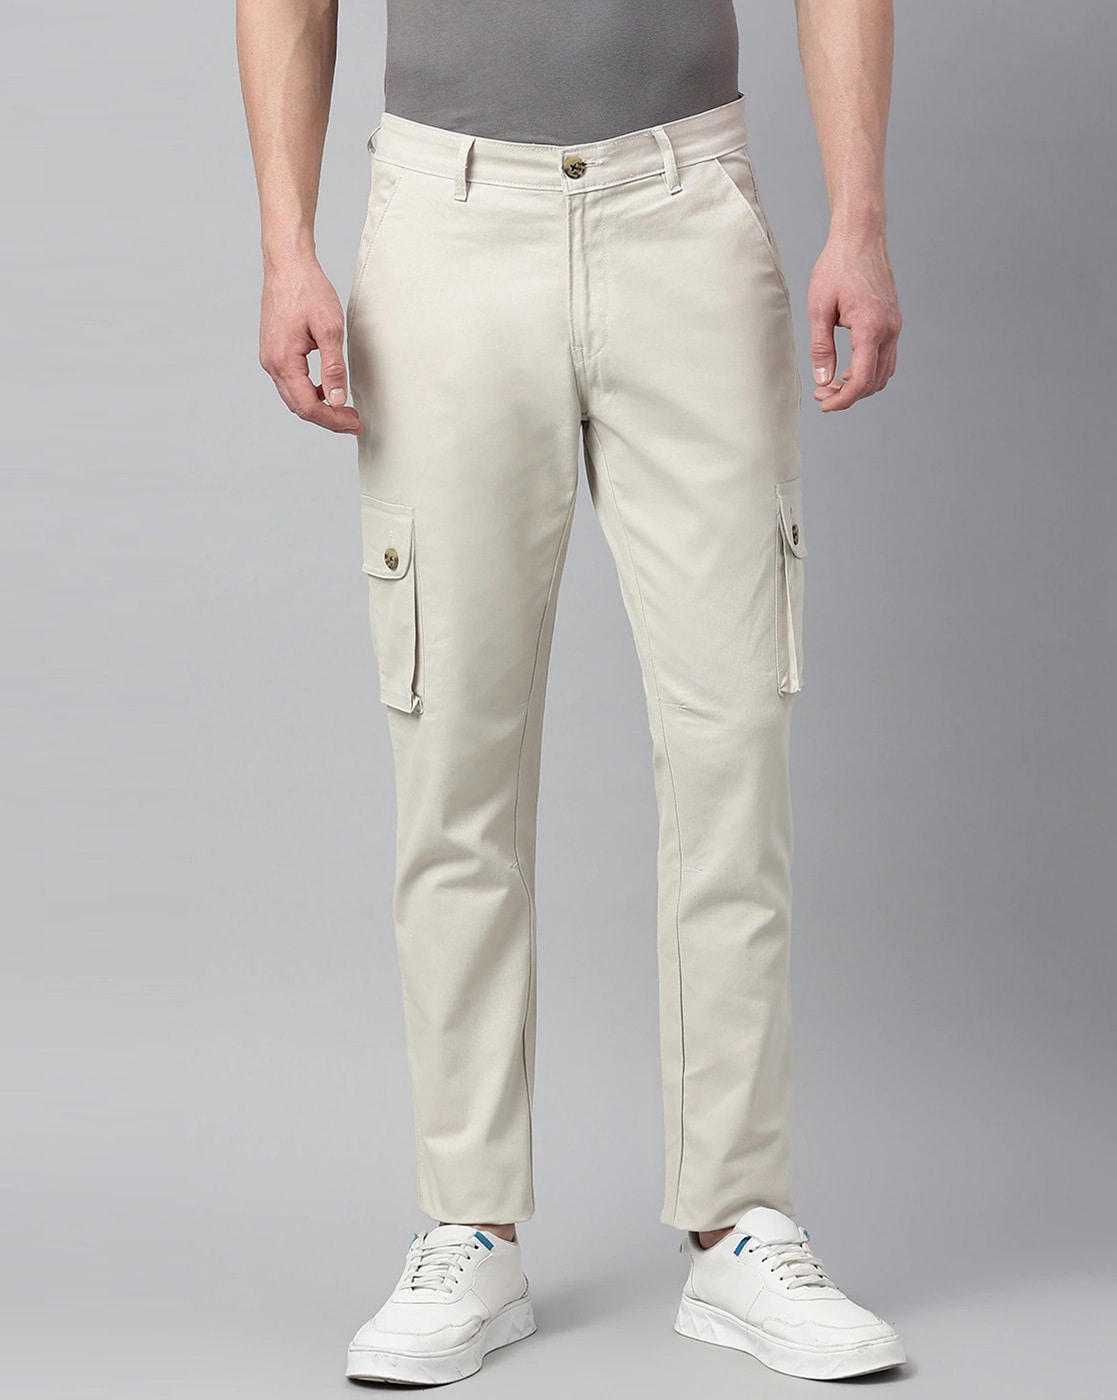 Buy Black Trousers & Pants for Men by Bene Kleed Online | Ajio.com